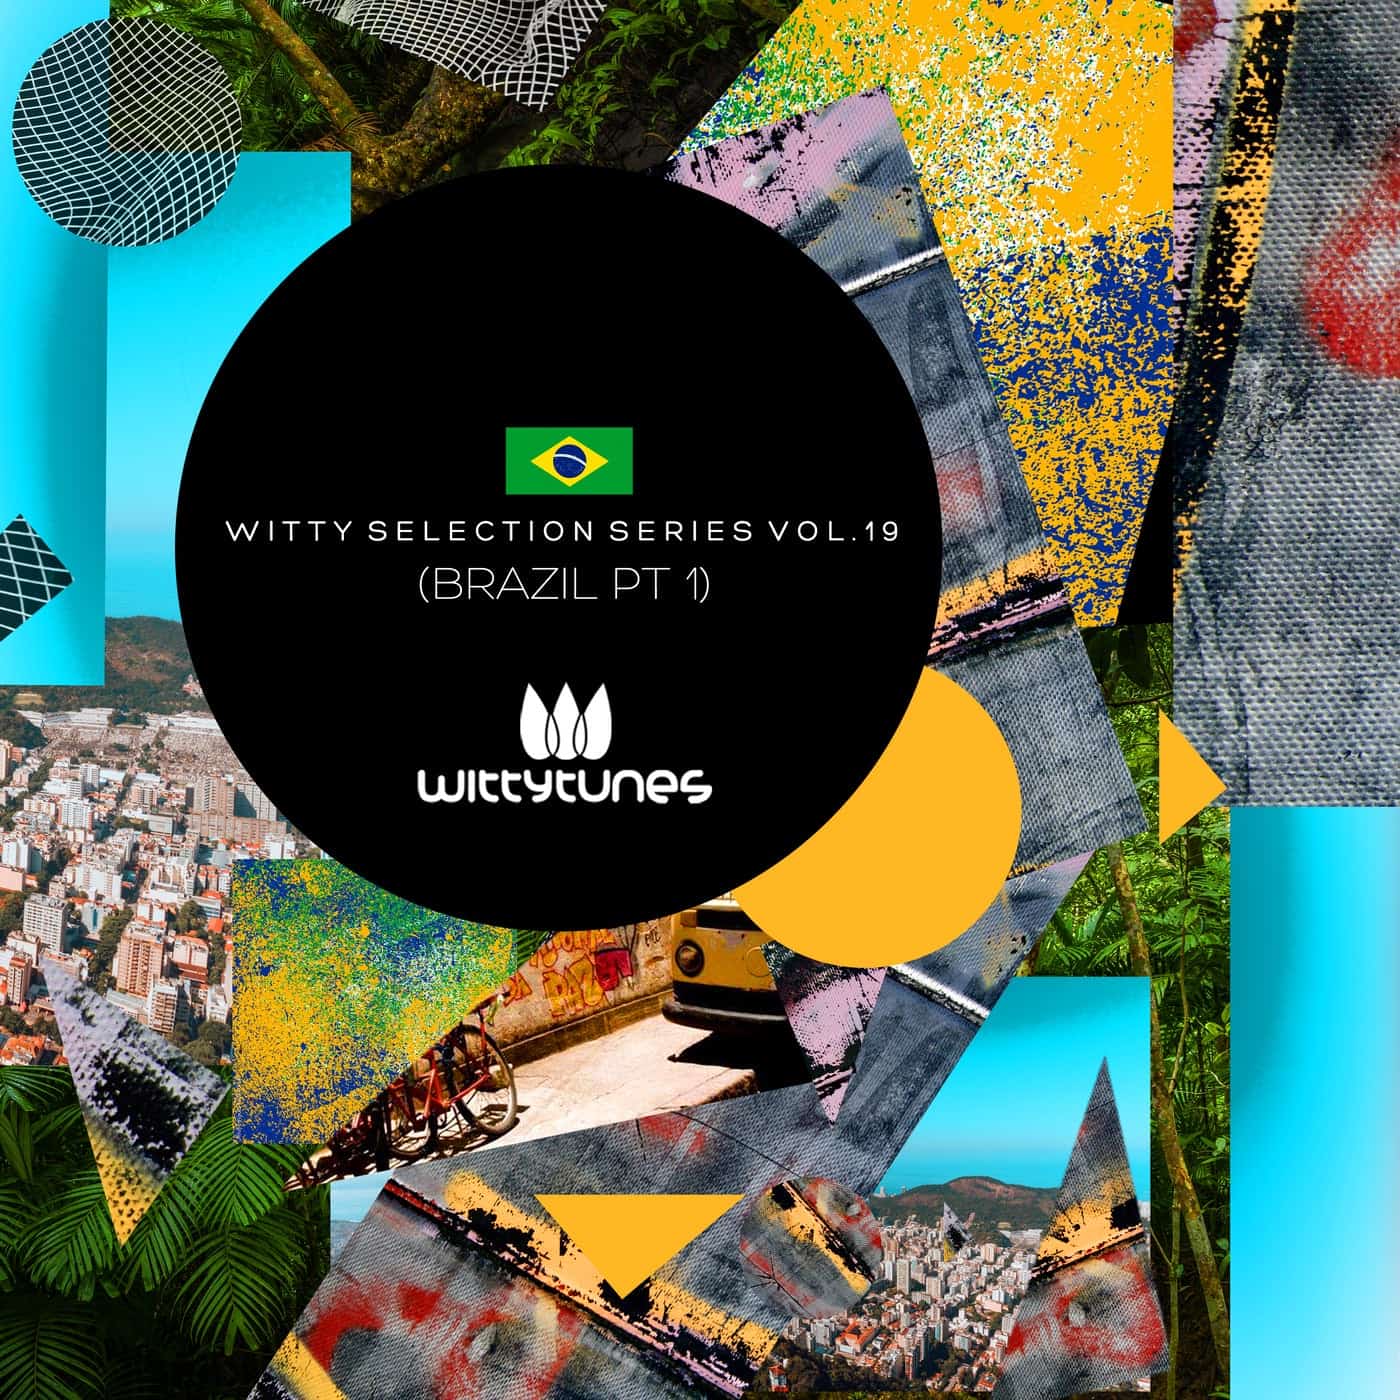 image cover: MNK4, Abbud, Crewcutz, Dabi, LET BR, Malvin (BR), Math Morelli, Vital (BR) - Witty Selection Series Vol. 19 - Brazil PT1 / WT402